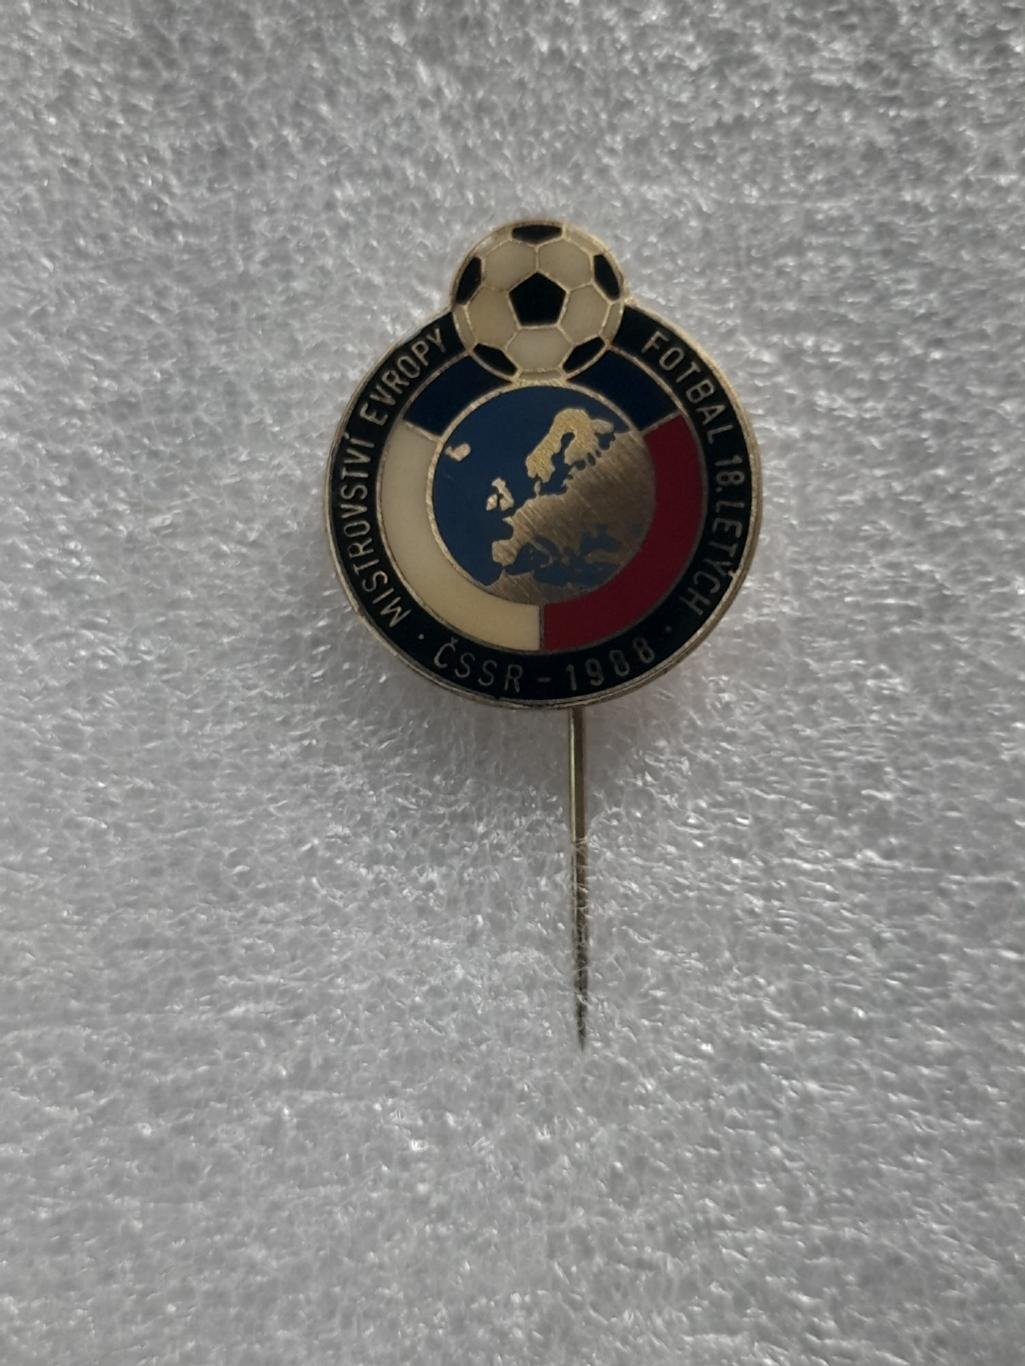 Чехословакия Федерация футбола